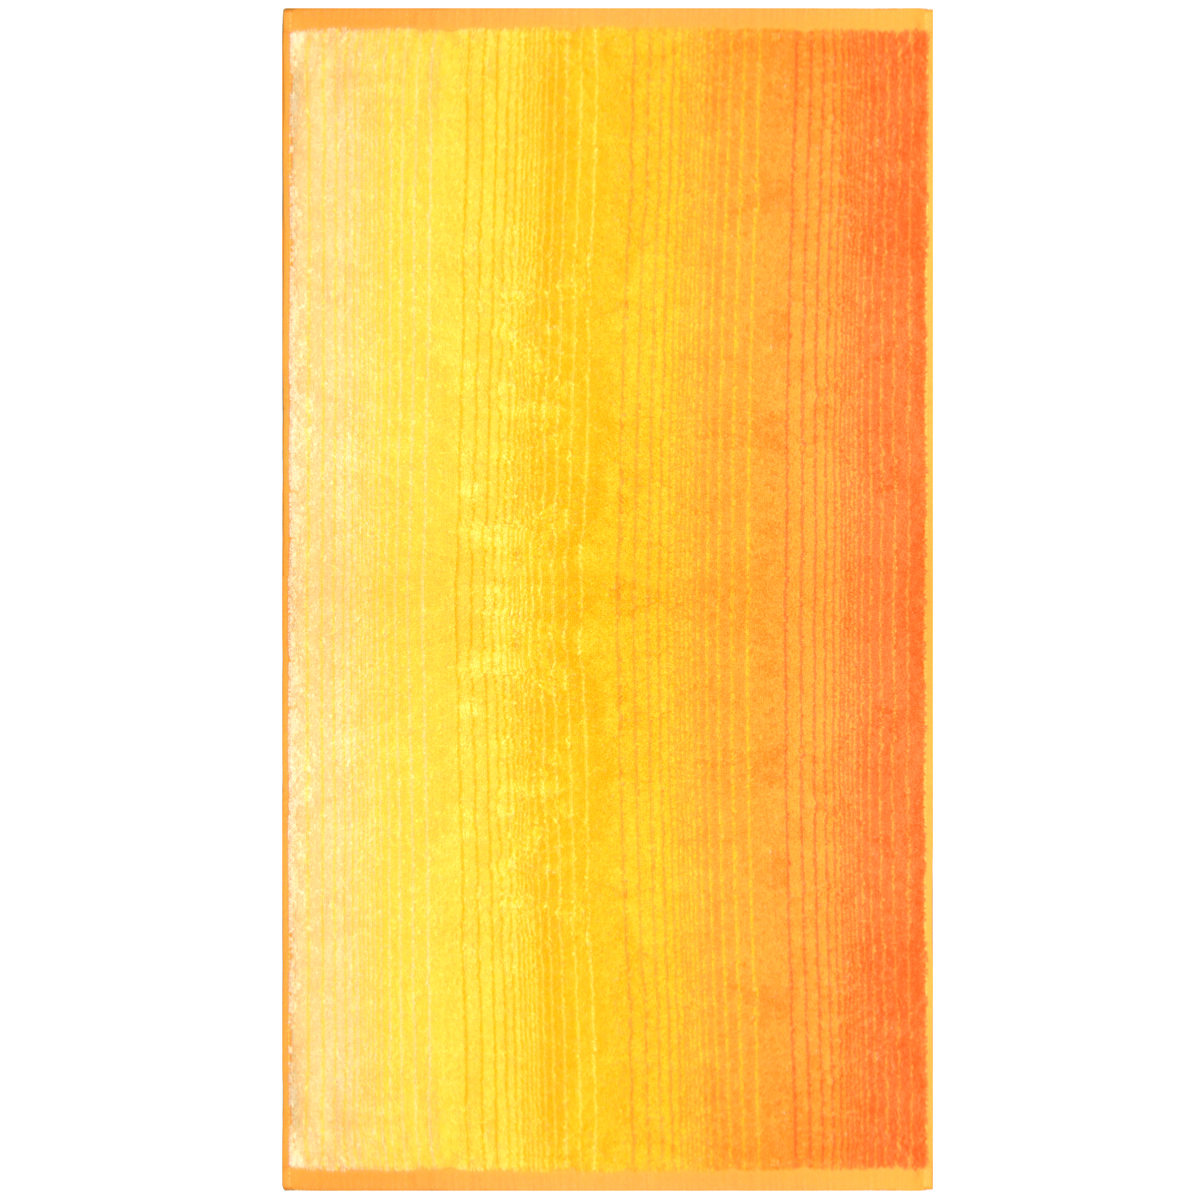 Dyckhoff Handtuch Colori gelb | 50x100 cm | Handtuch & Co | Handtuch-Sets